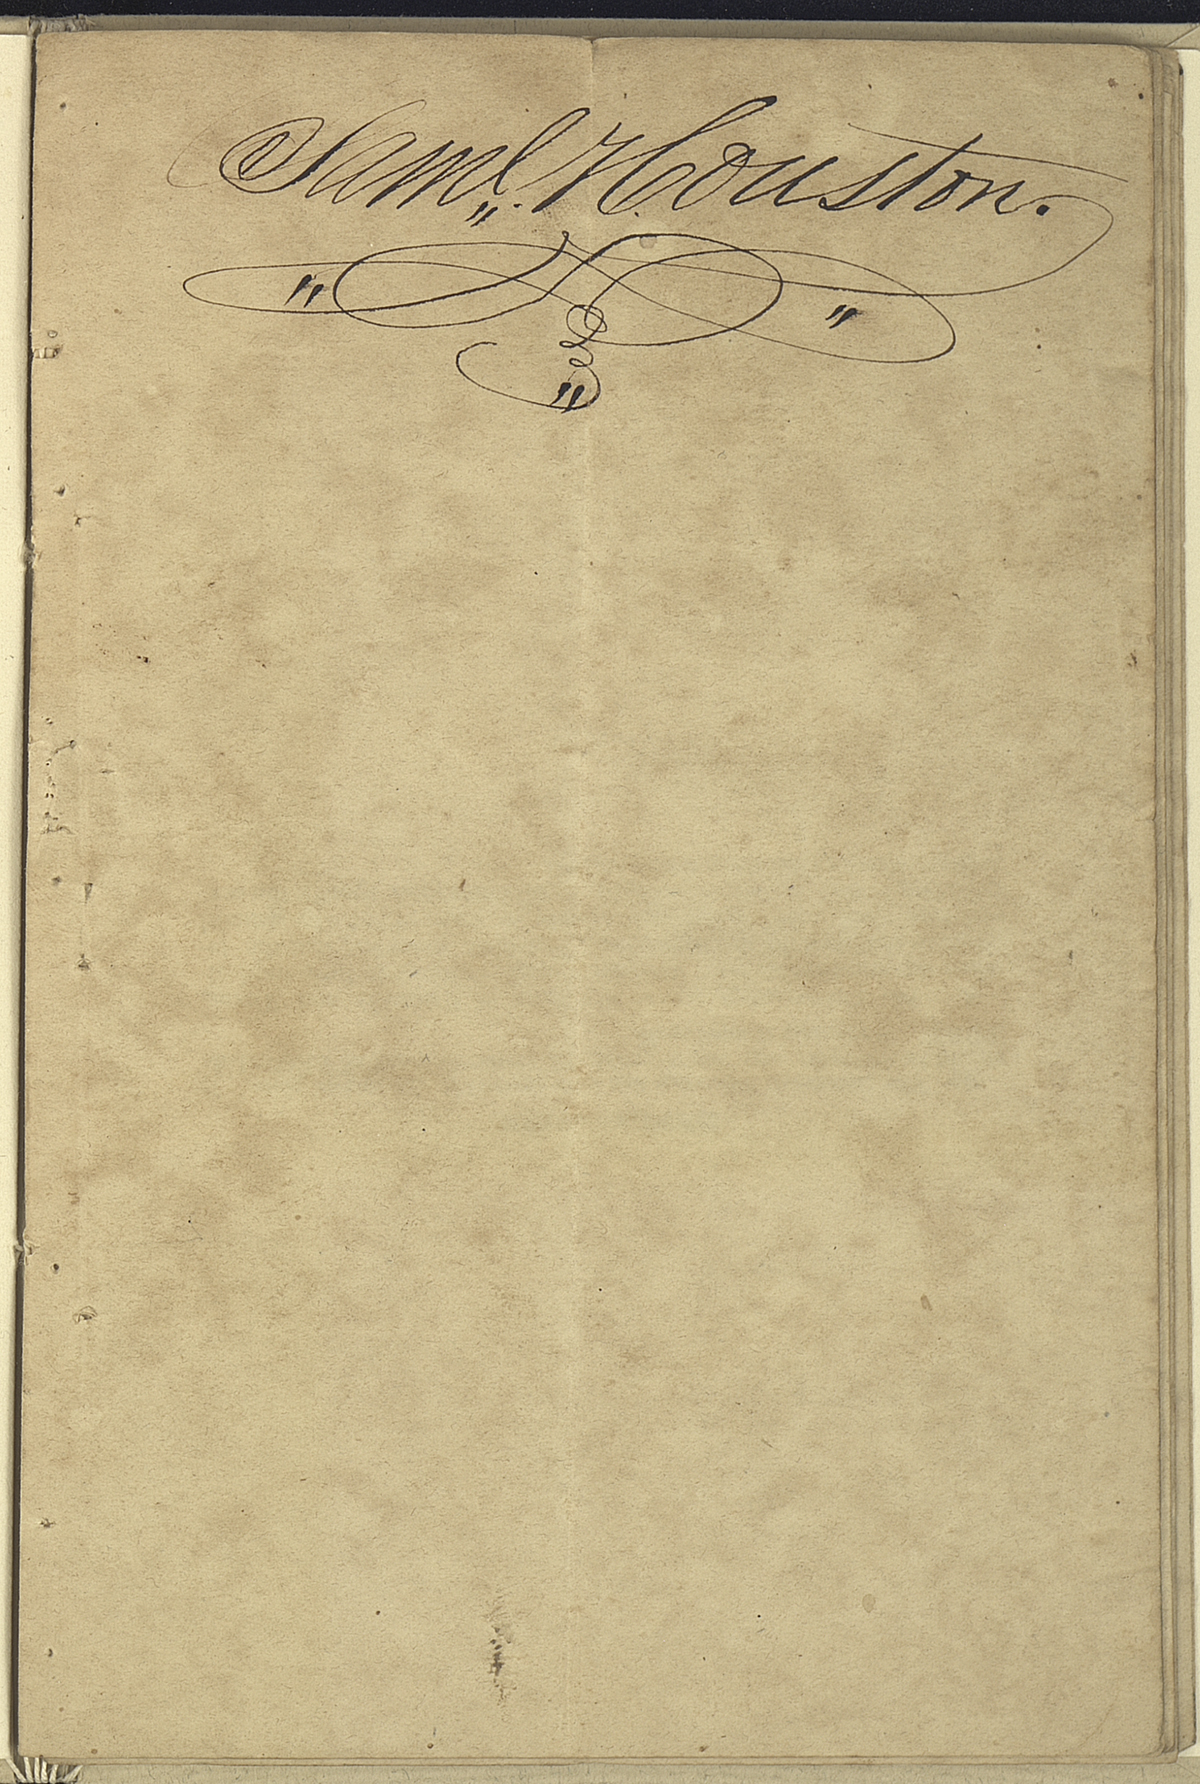 Signature Page (Sam Houston signature)